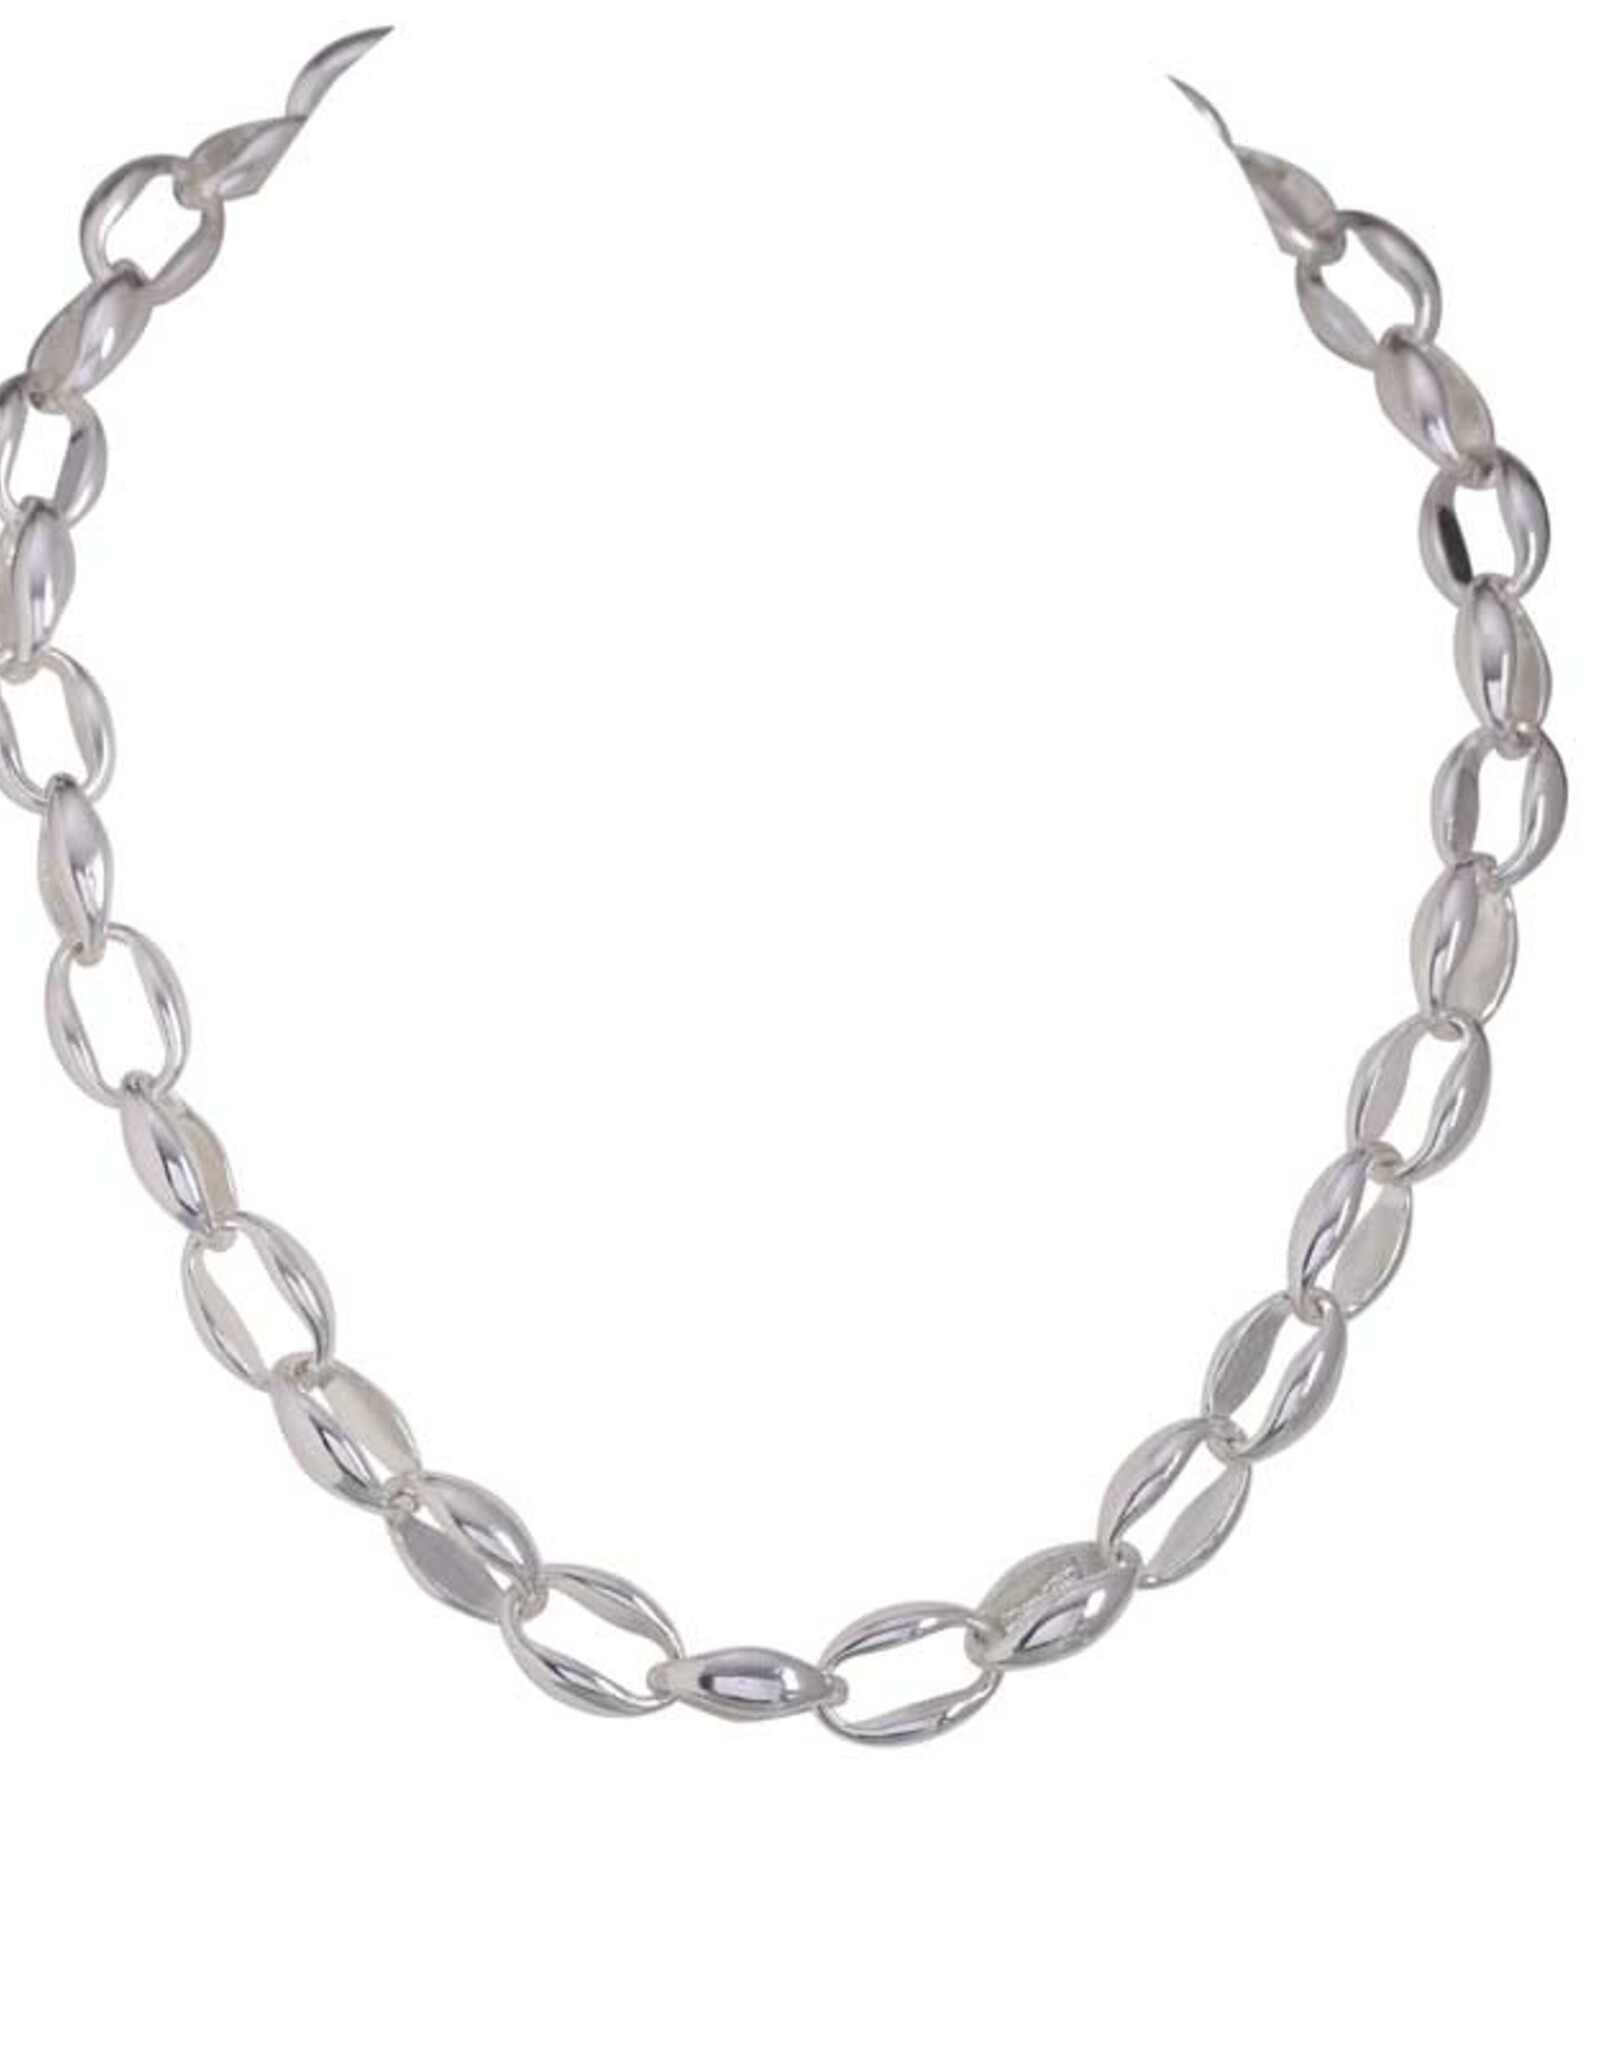 Merx Inc. Fashion Chain NK Silver Fancy Links 40.5 + 7cm Silver